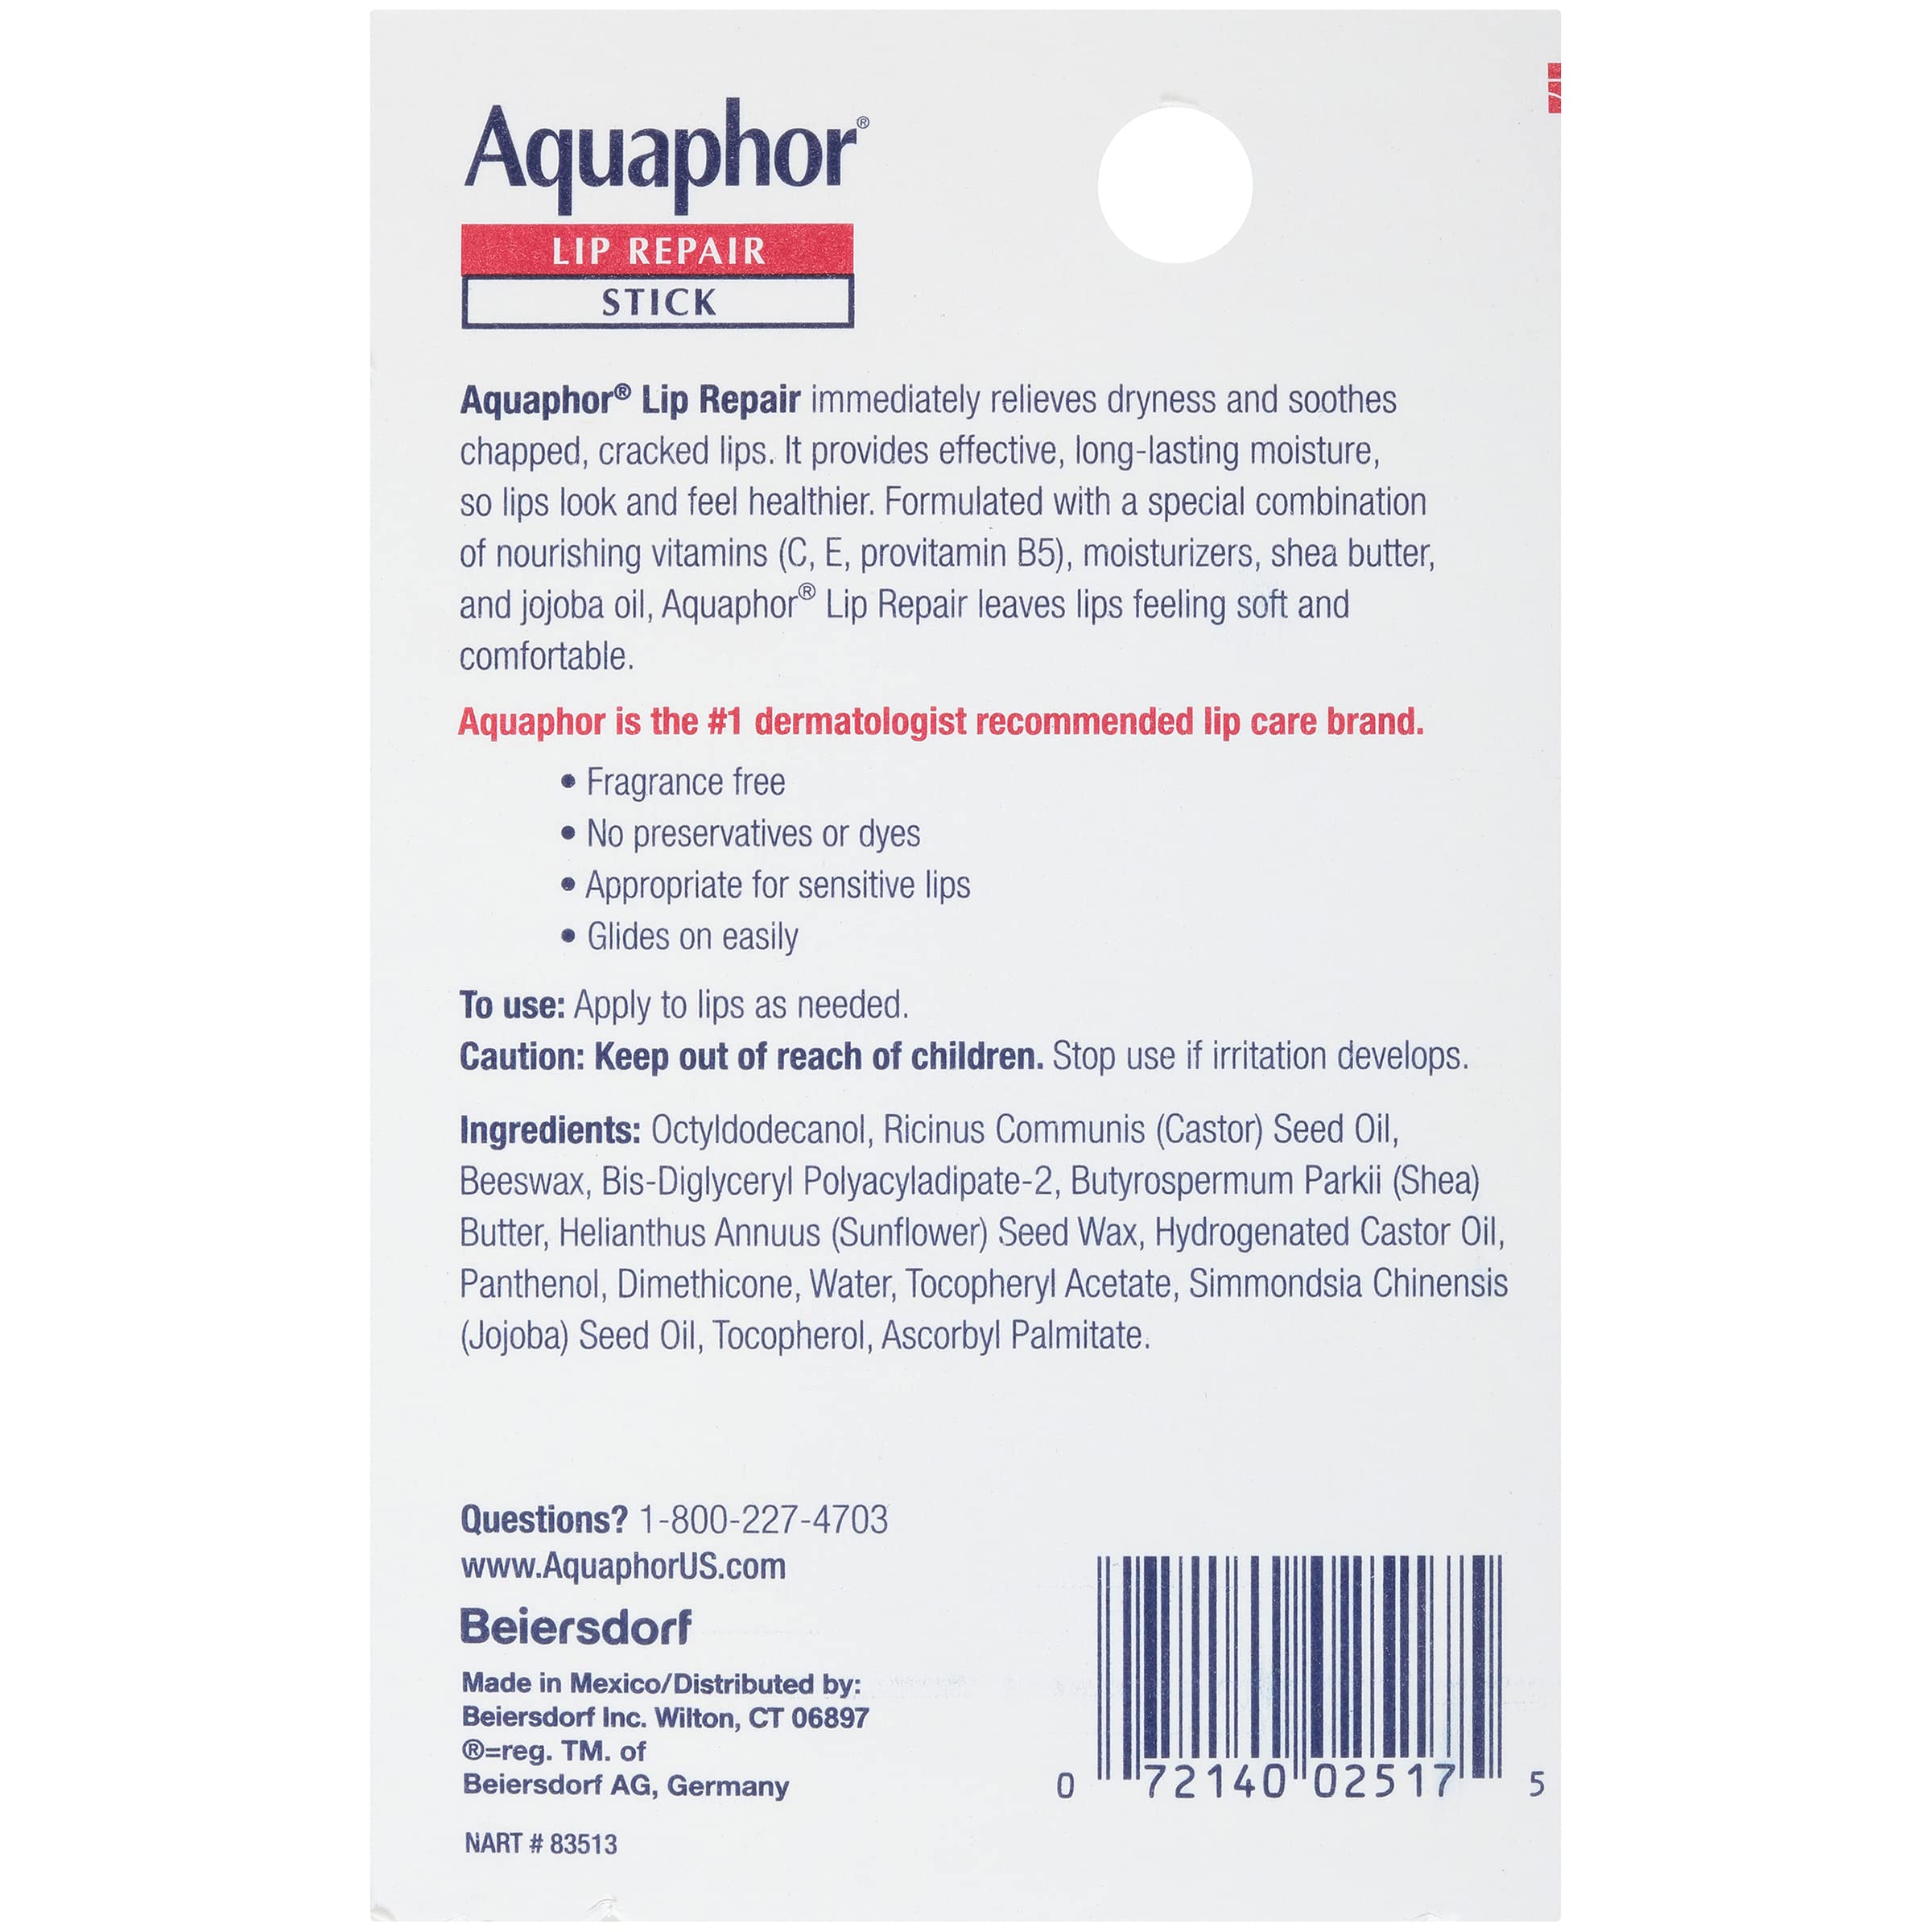 Aquaphor Lip Repair, Moisturizing Lip Balm Multipack (2 Repair sticks + 2 Repair & Protect SPF 30 sticks)